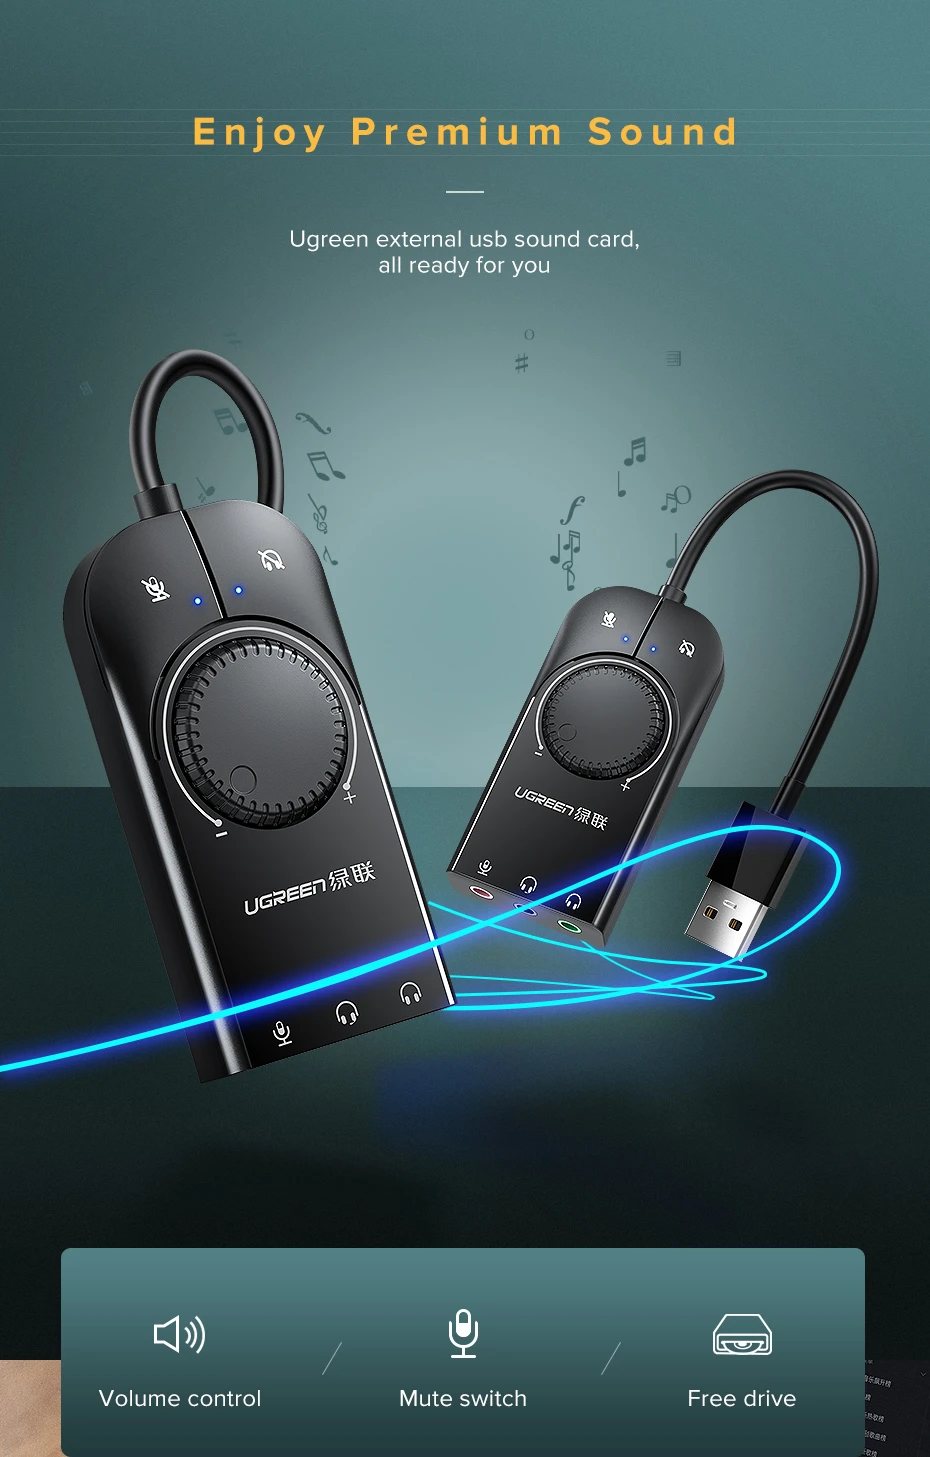 UGREEN USB Audio Adapter External Stereo Sound Card 2